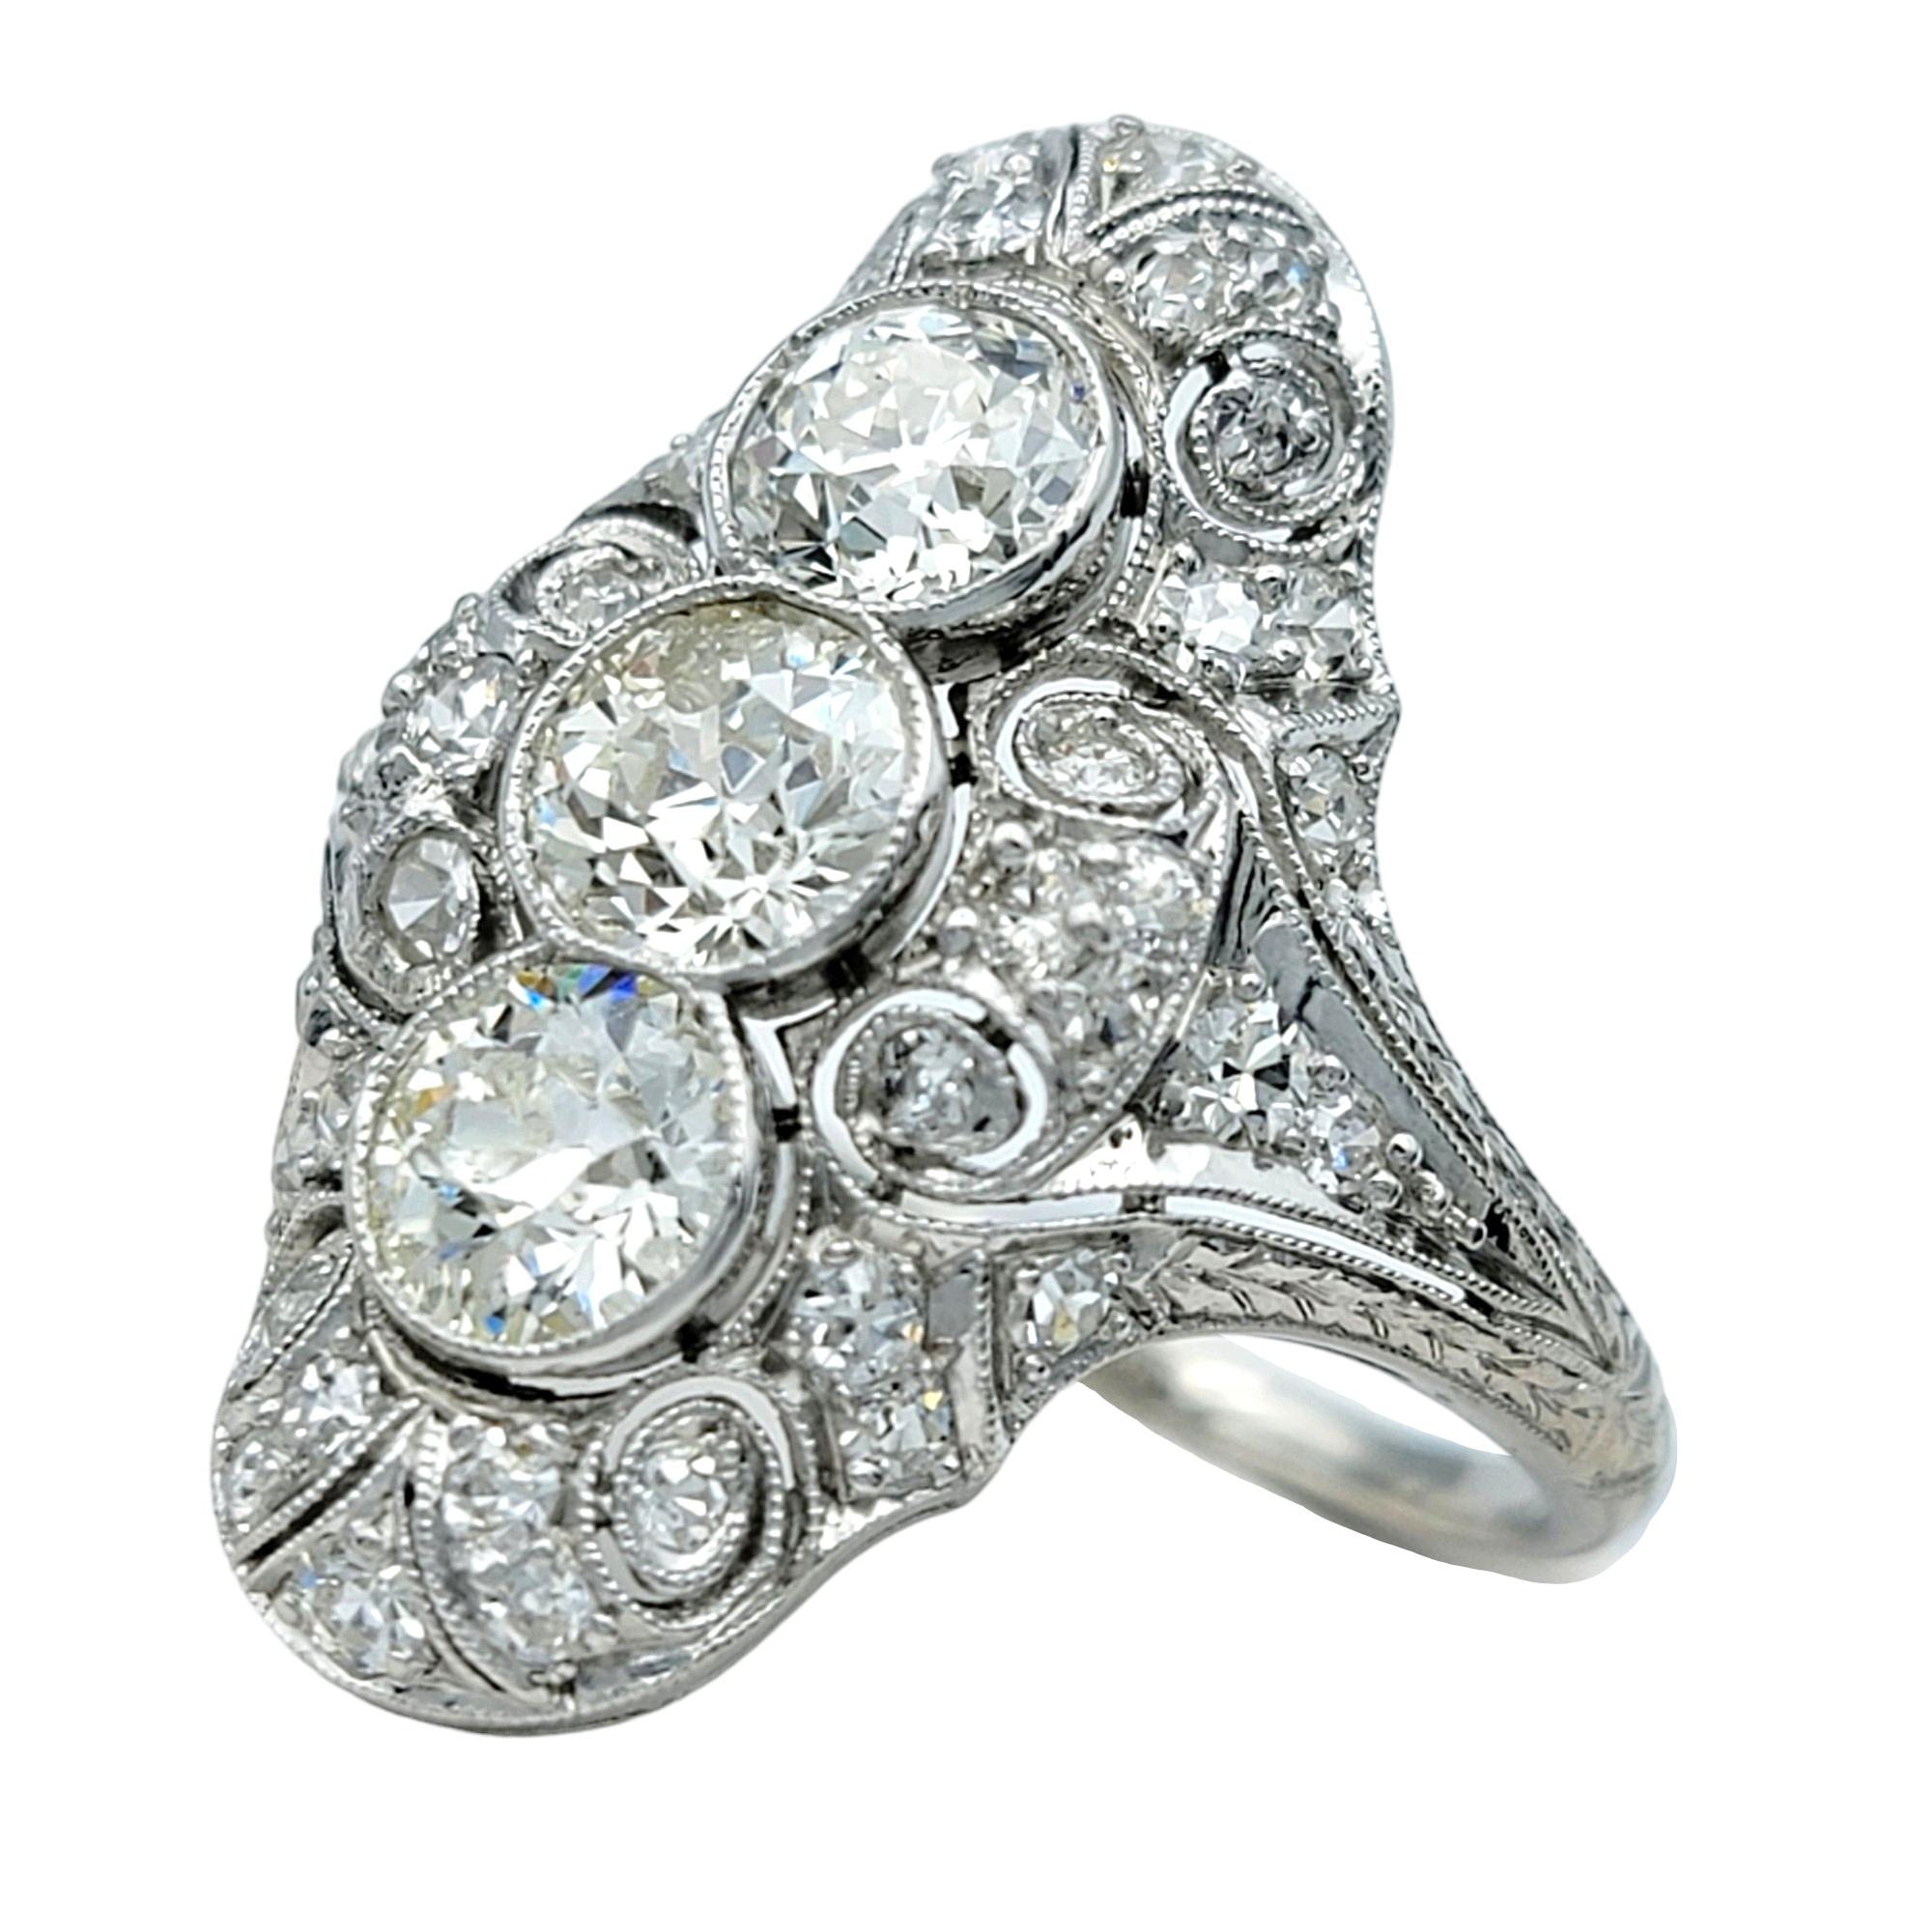 Art Deco Old European Cut Diamond Cocktail Ring with Milgrain Design in Platinum In Good Condition For Sale In Scottsdale, AZ